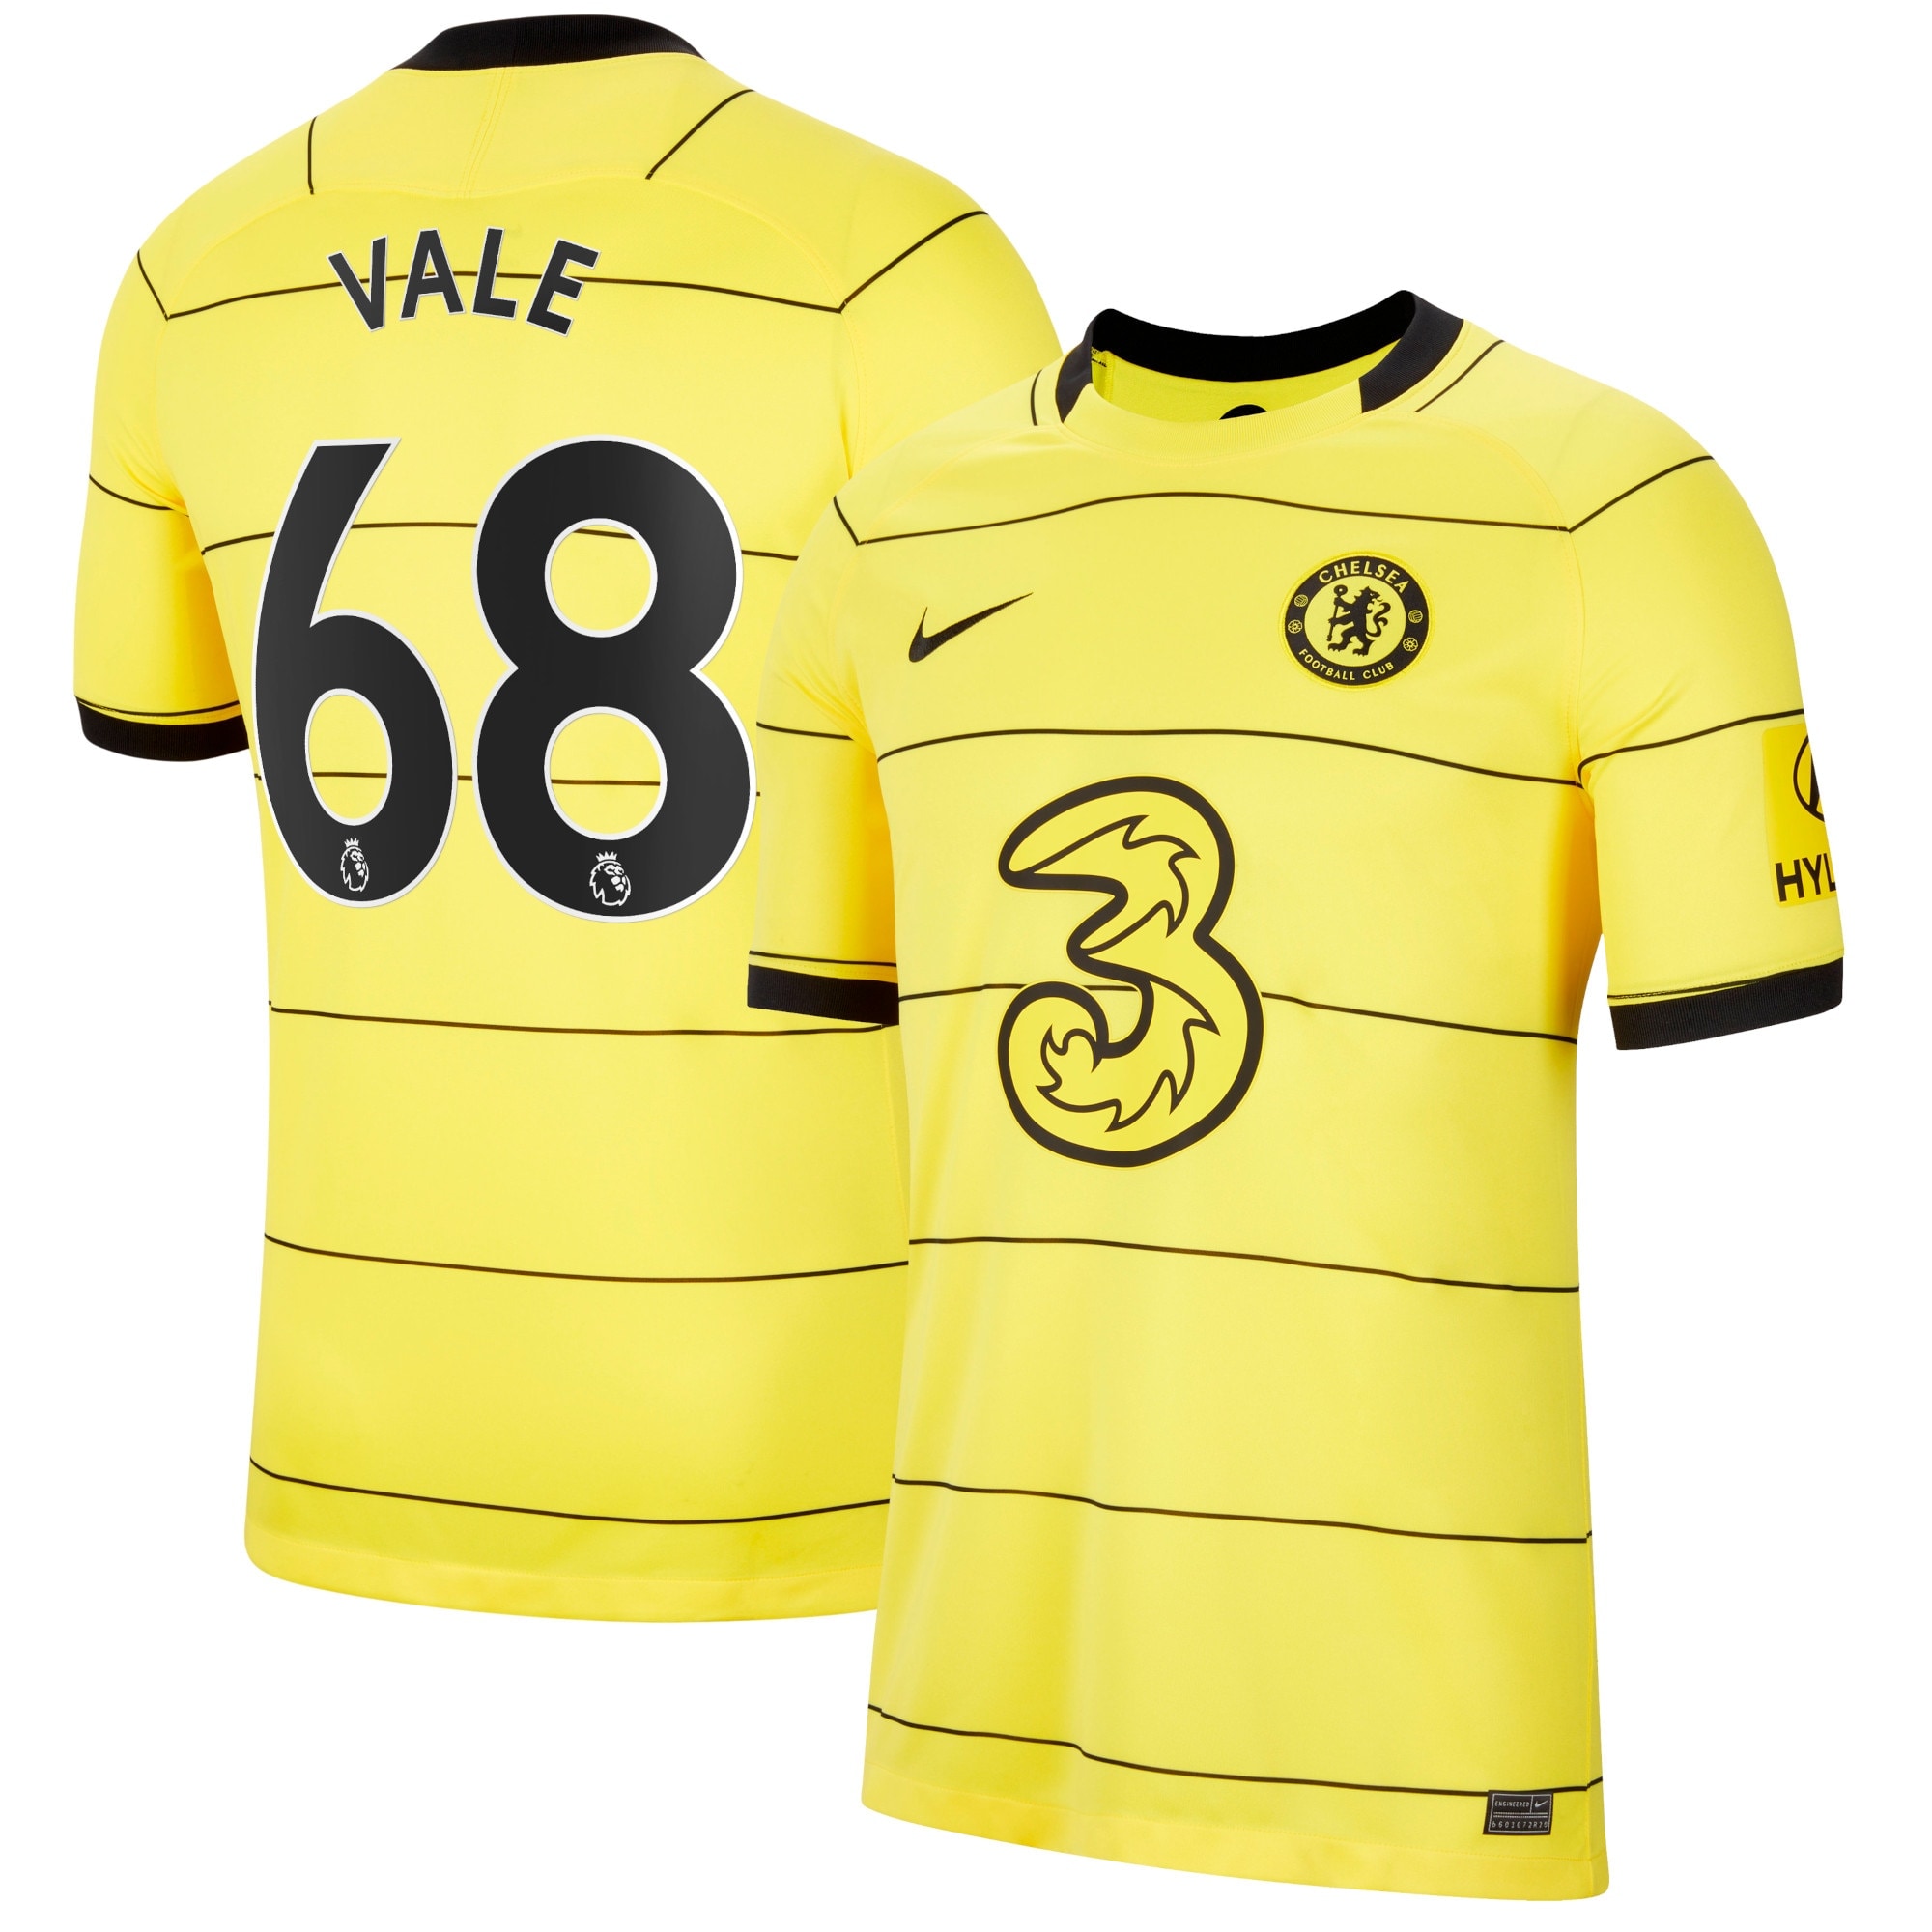 Chelsea Away Stadium Shirt 2021-22 with Vale 68 printing